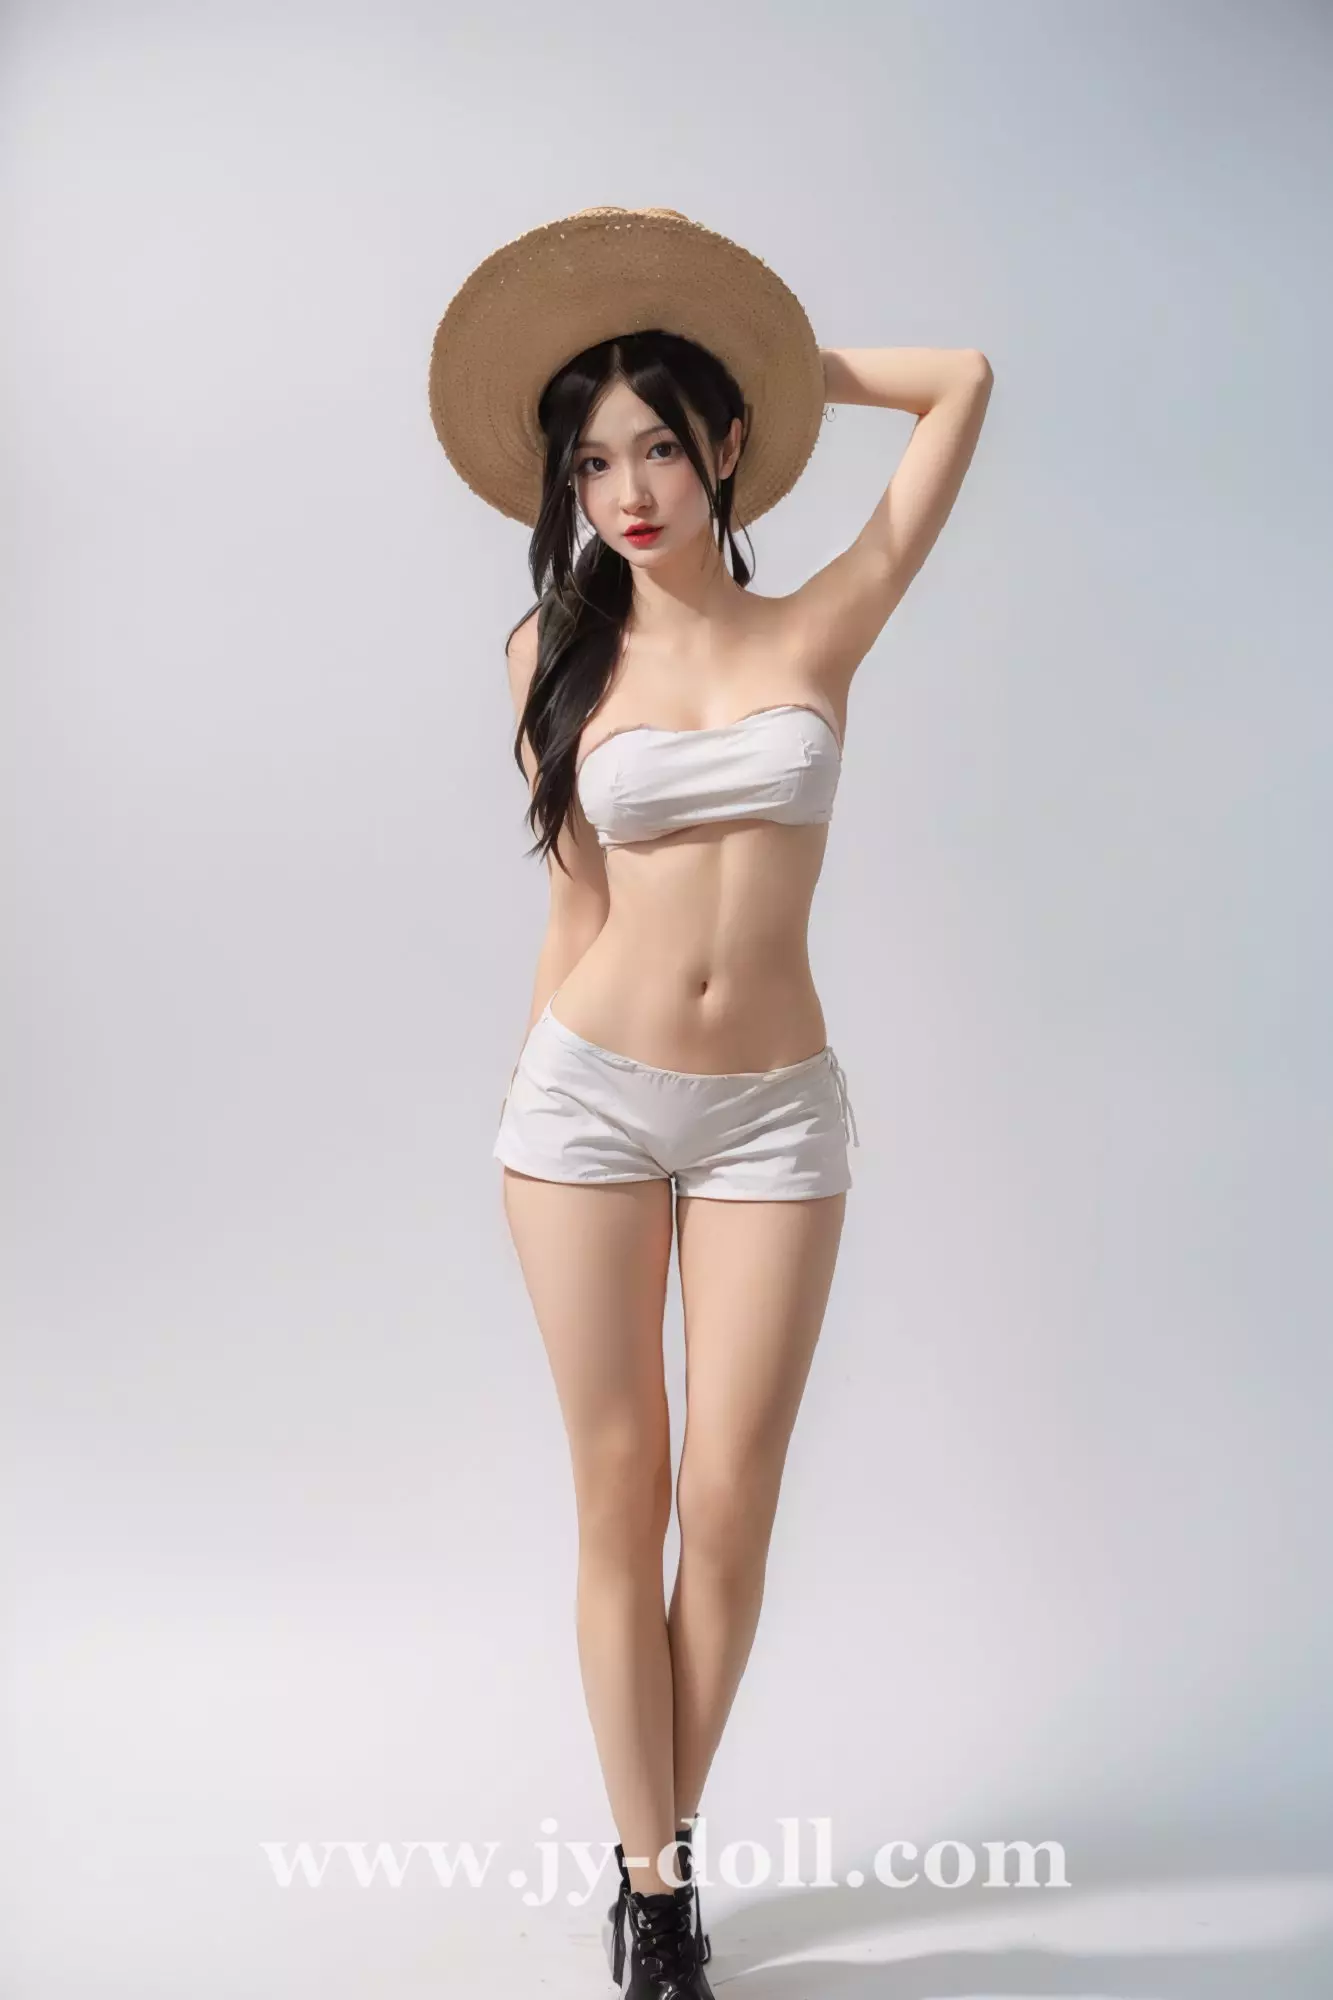 JY Doll 163cm ROS doll Wan Chun